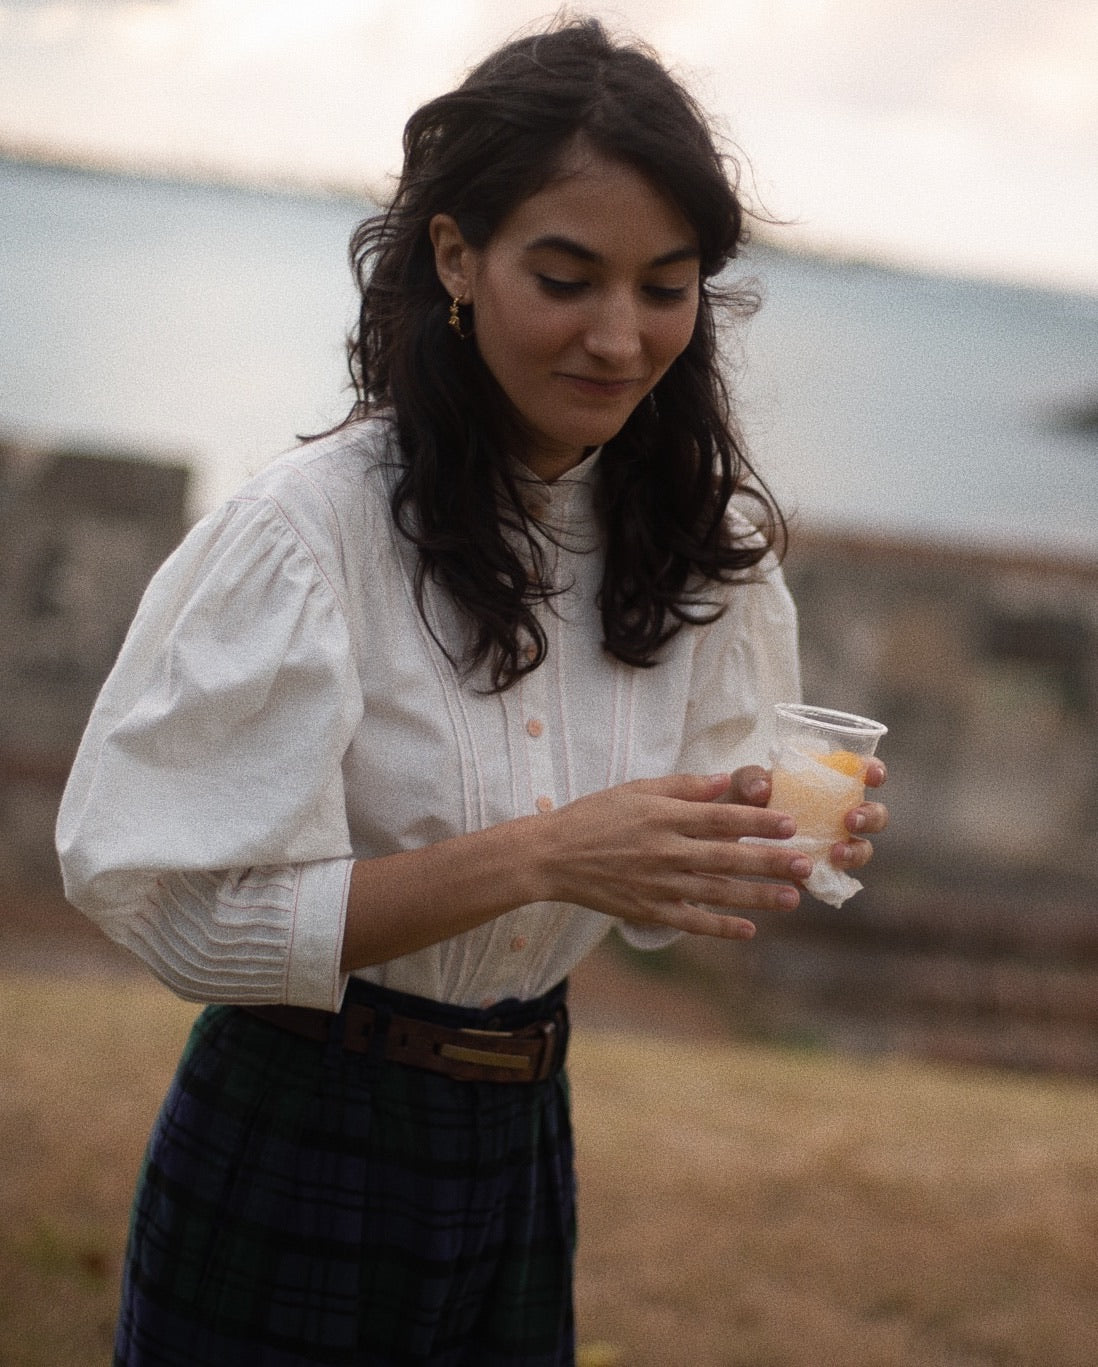 Alexandra blouse in antique cotton linen